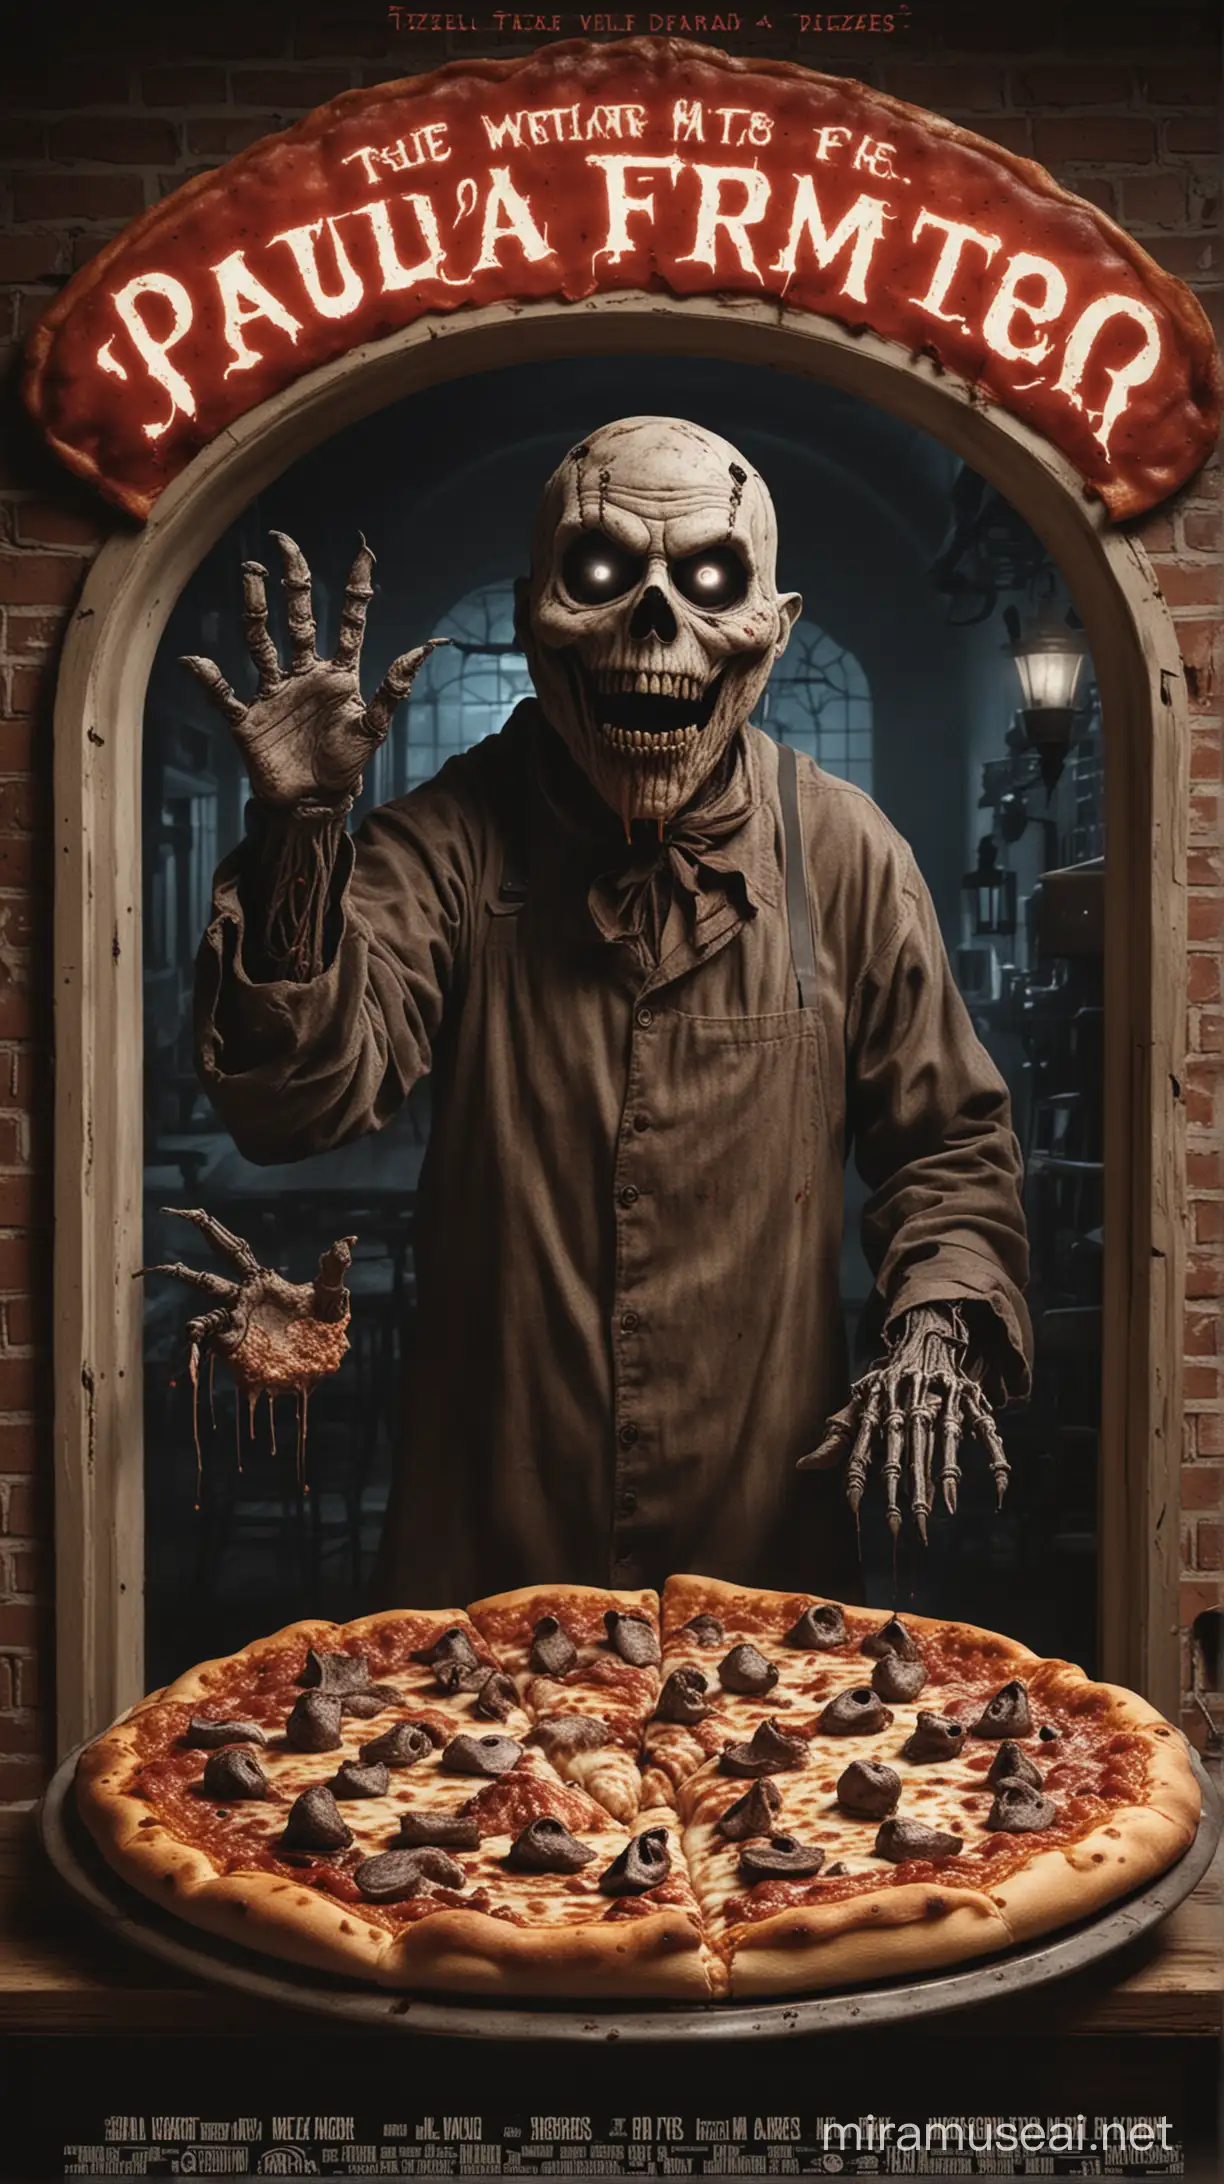 Terrifying Animatronics Horror Movie Poster of Haunted Pizza Restaurant